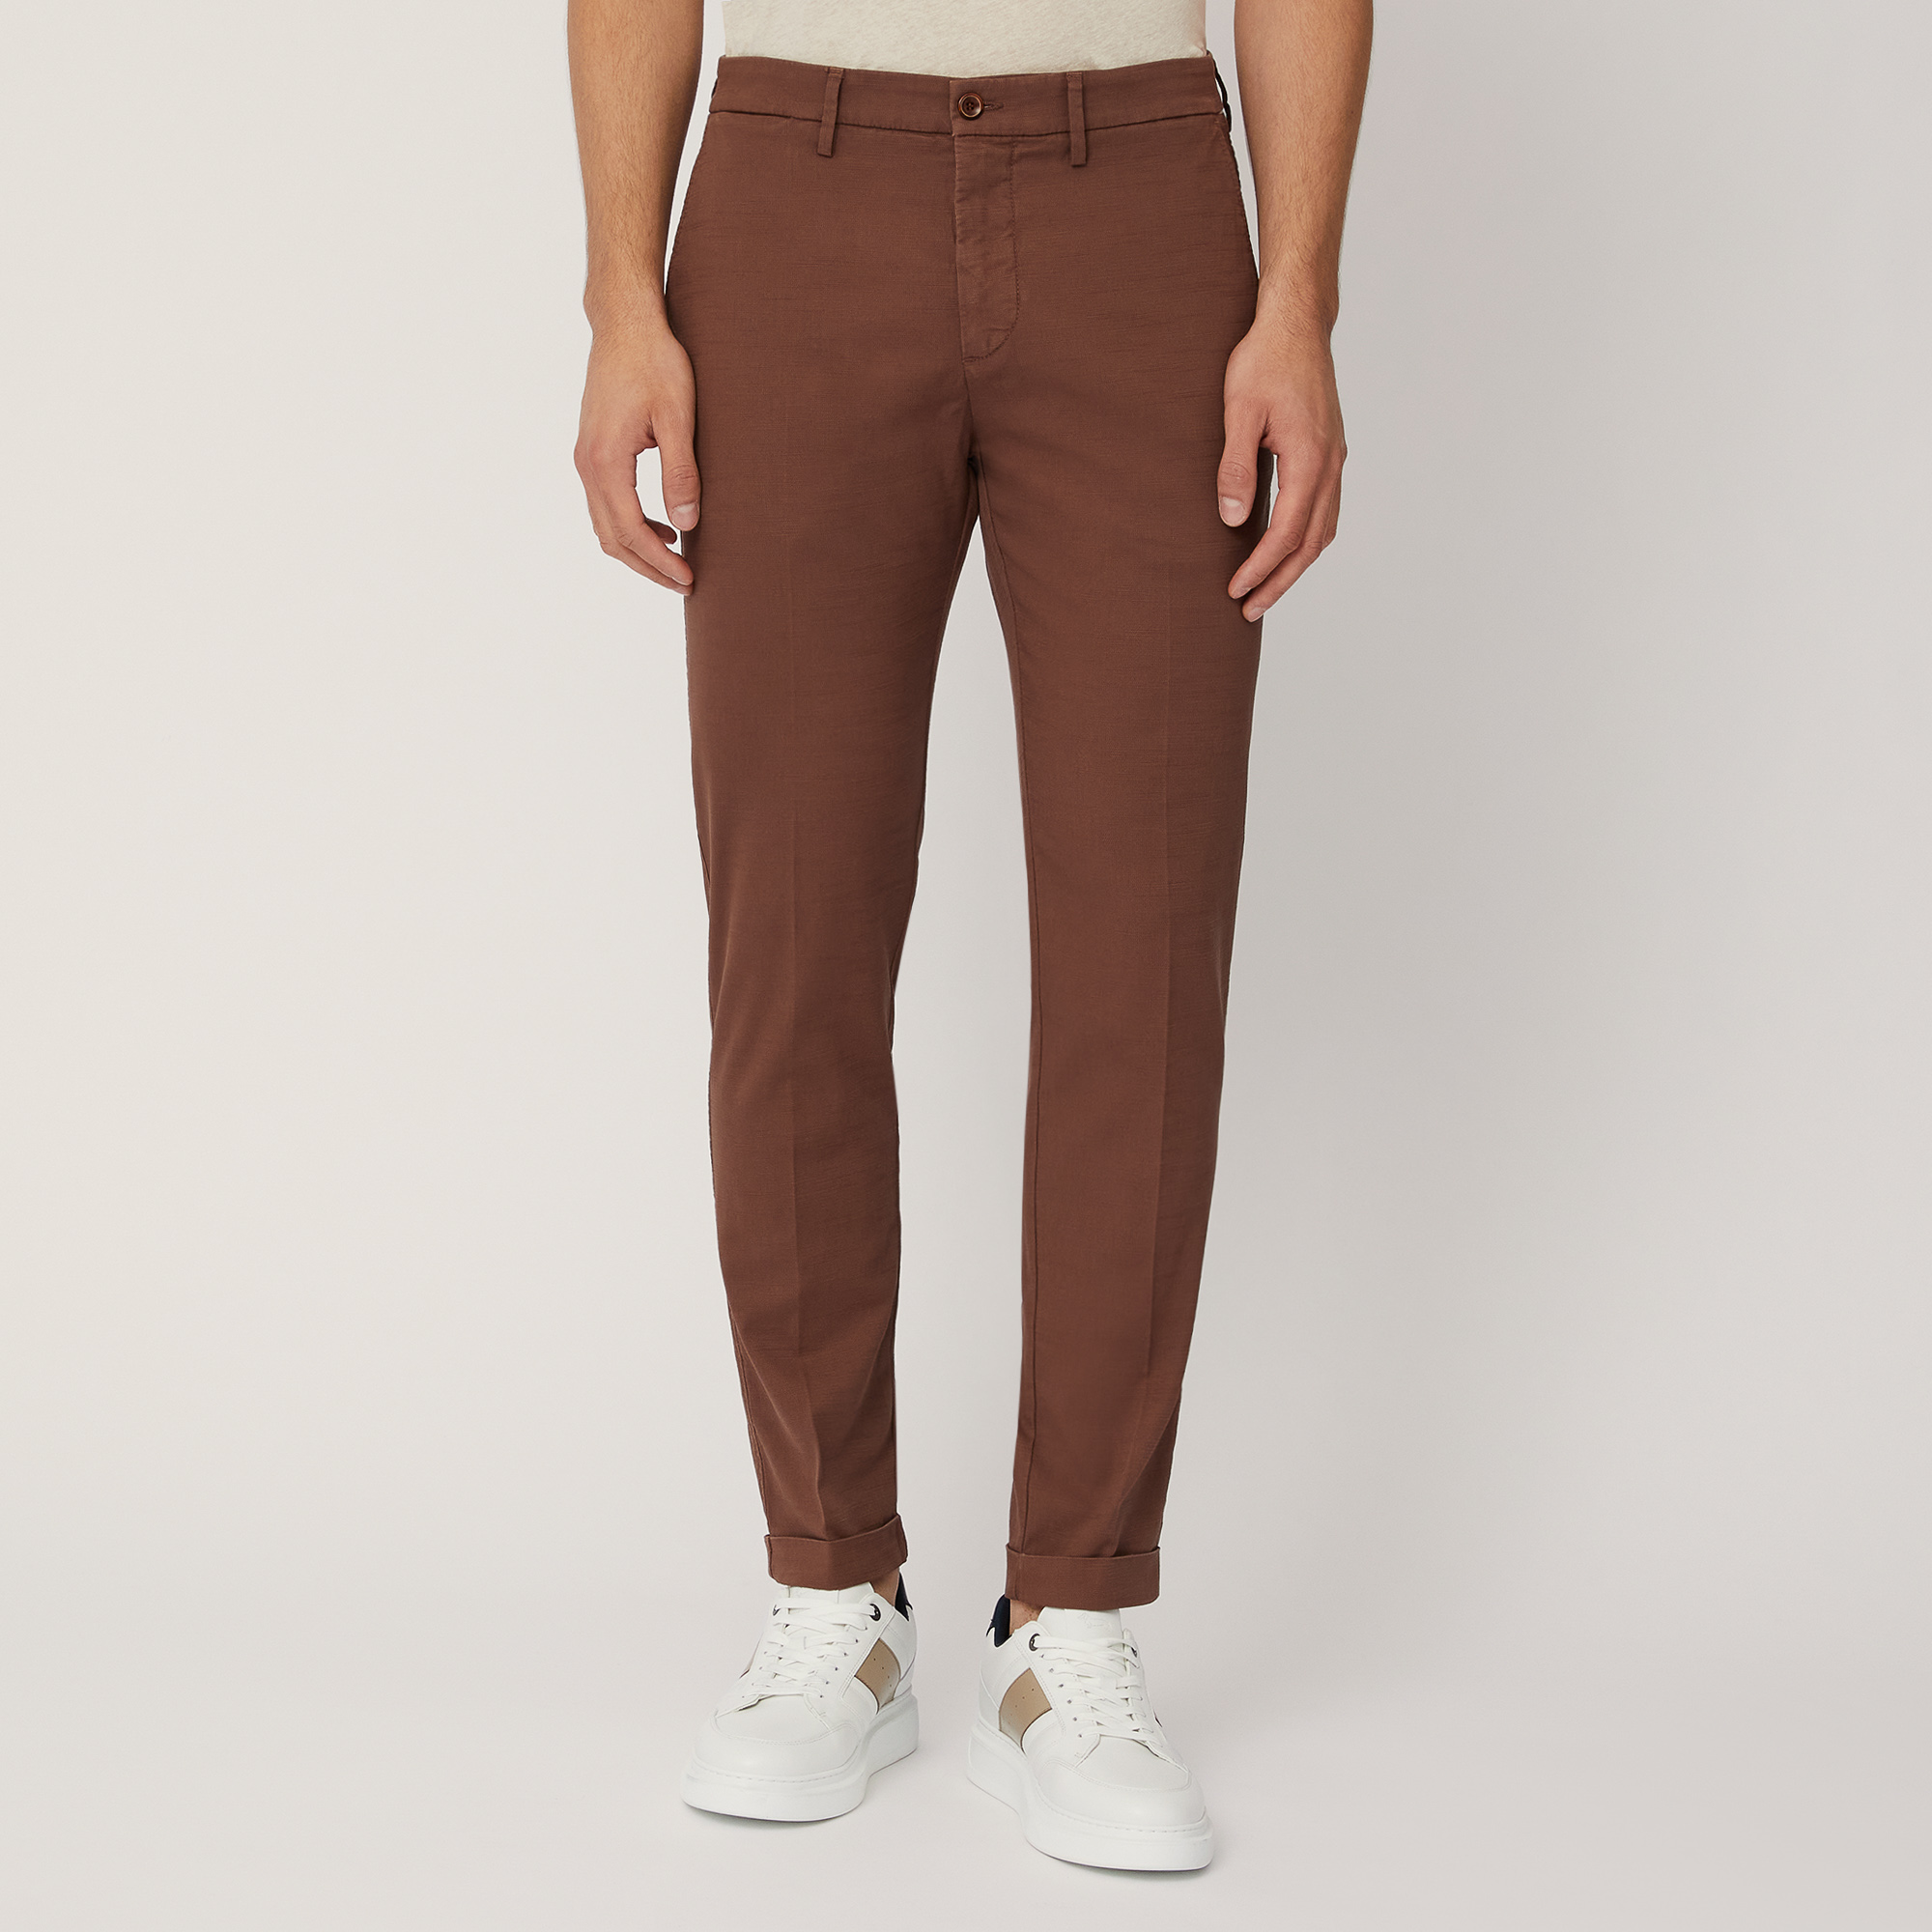 Slim Fit Chino Pants, Brown, large